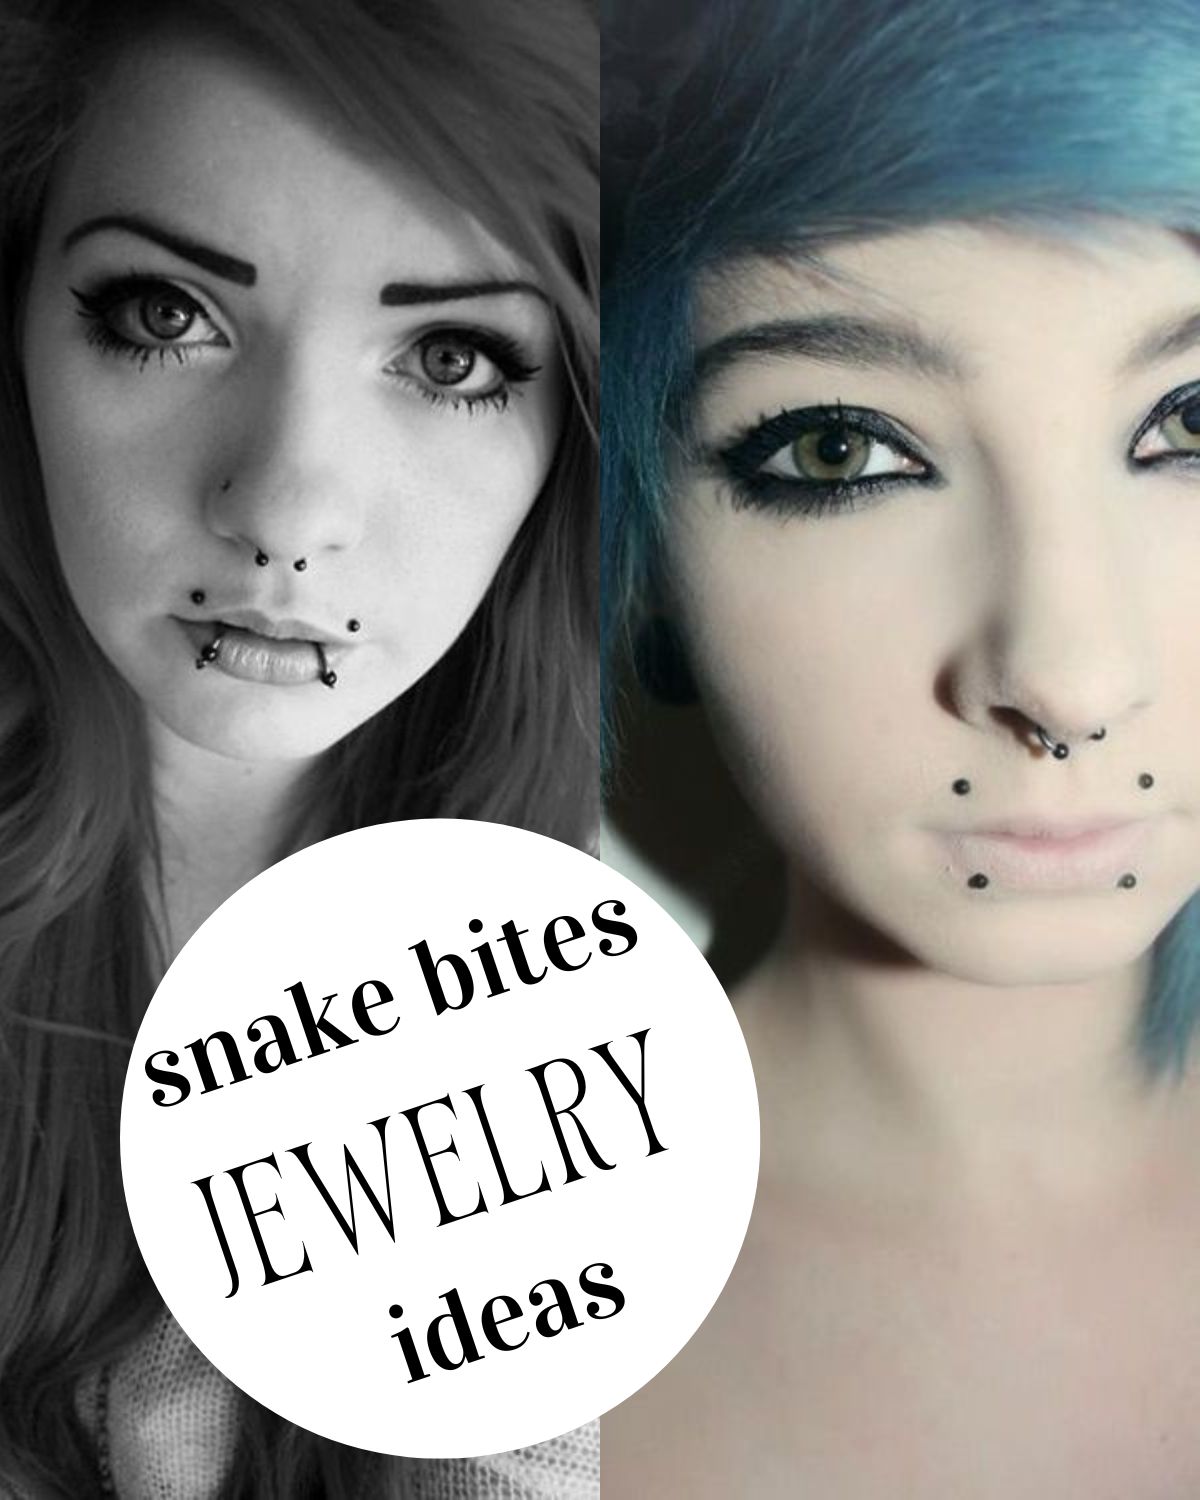 Two women with cute snake bite piercing jewelry